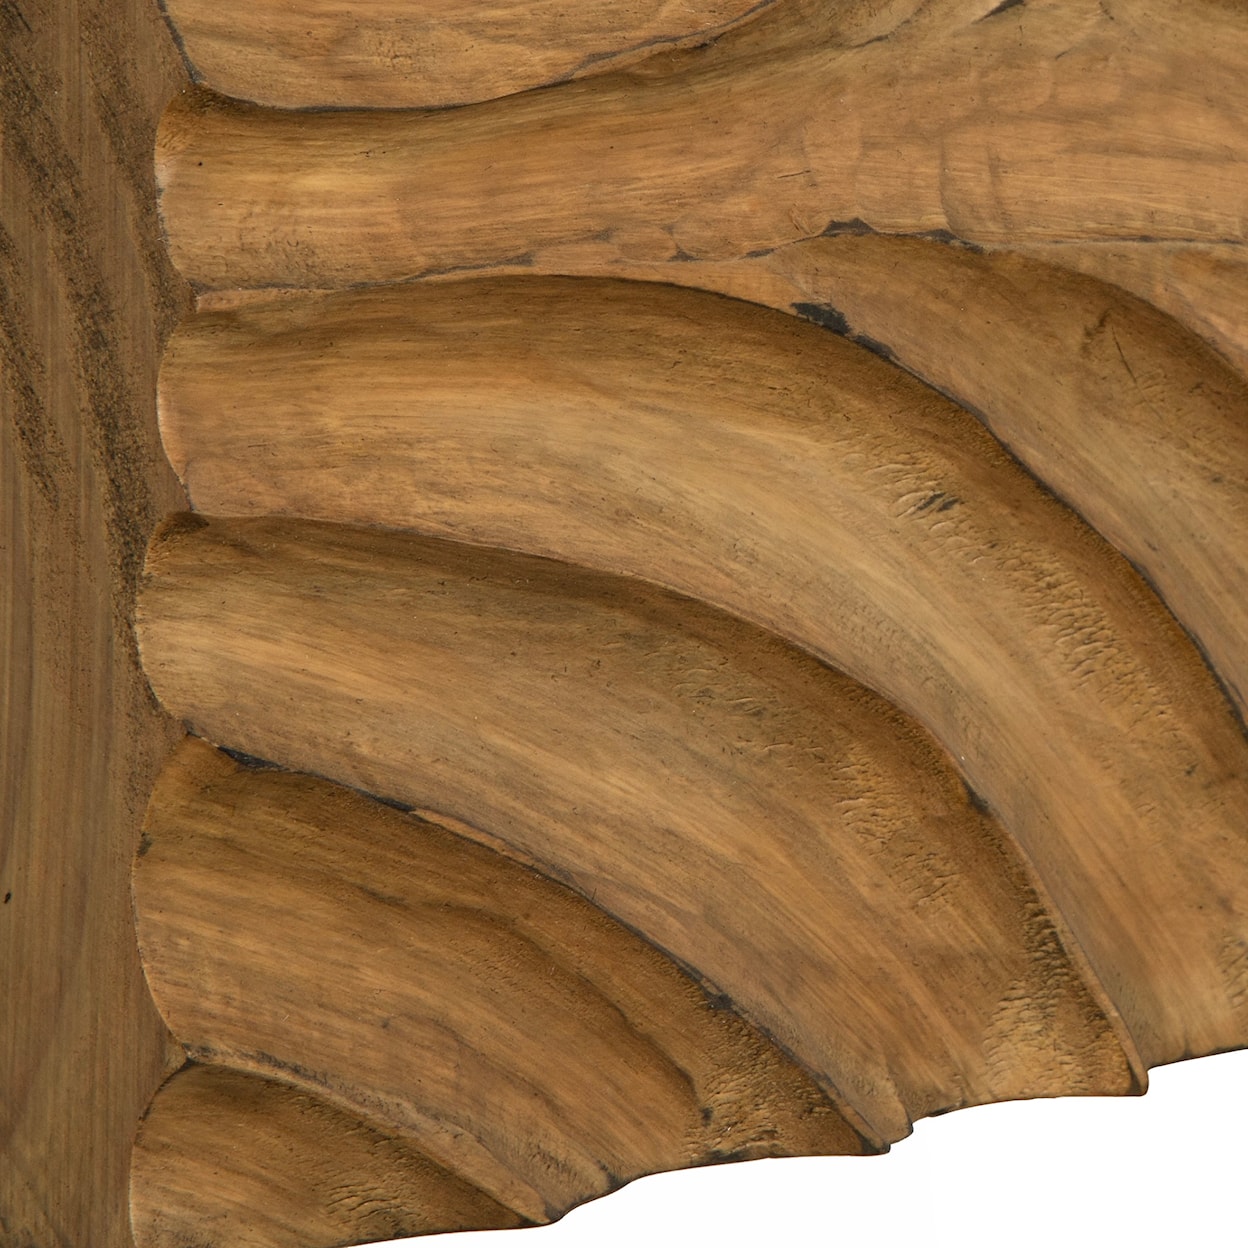 Uttermost Channels Channels Wood Wall Decor